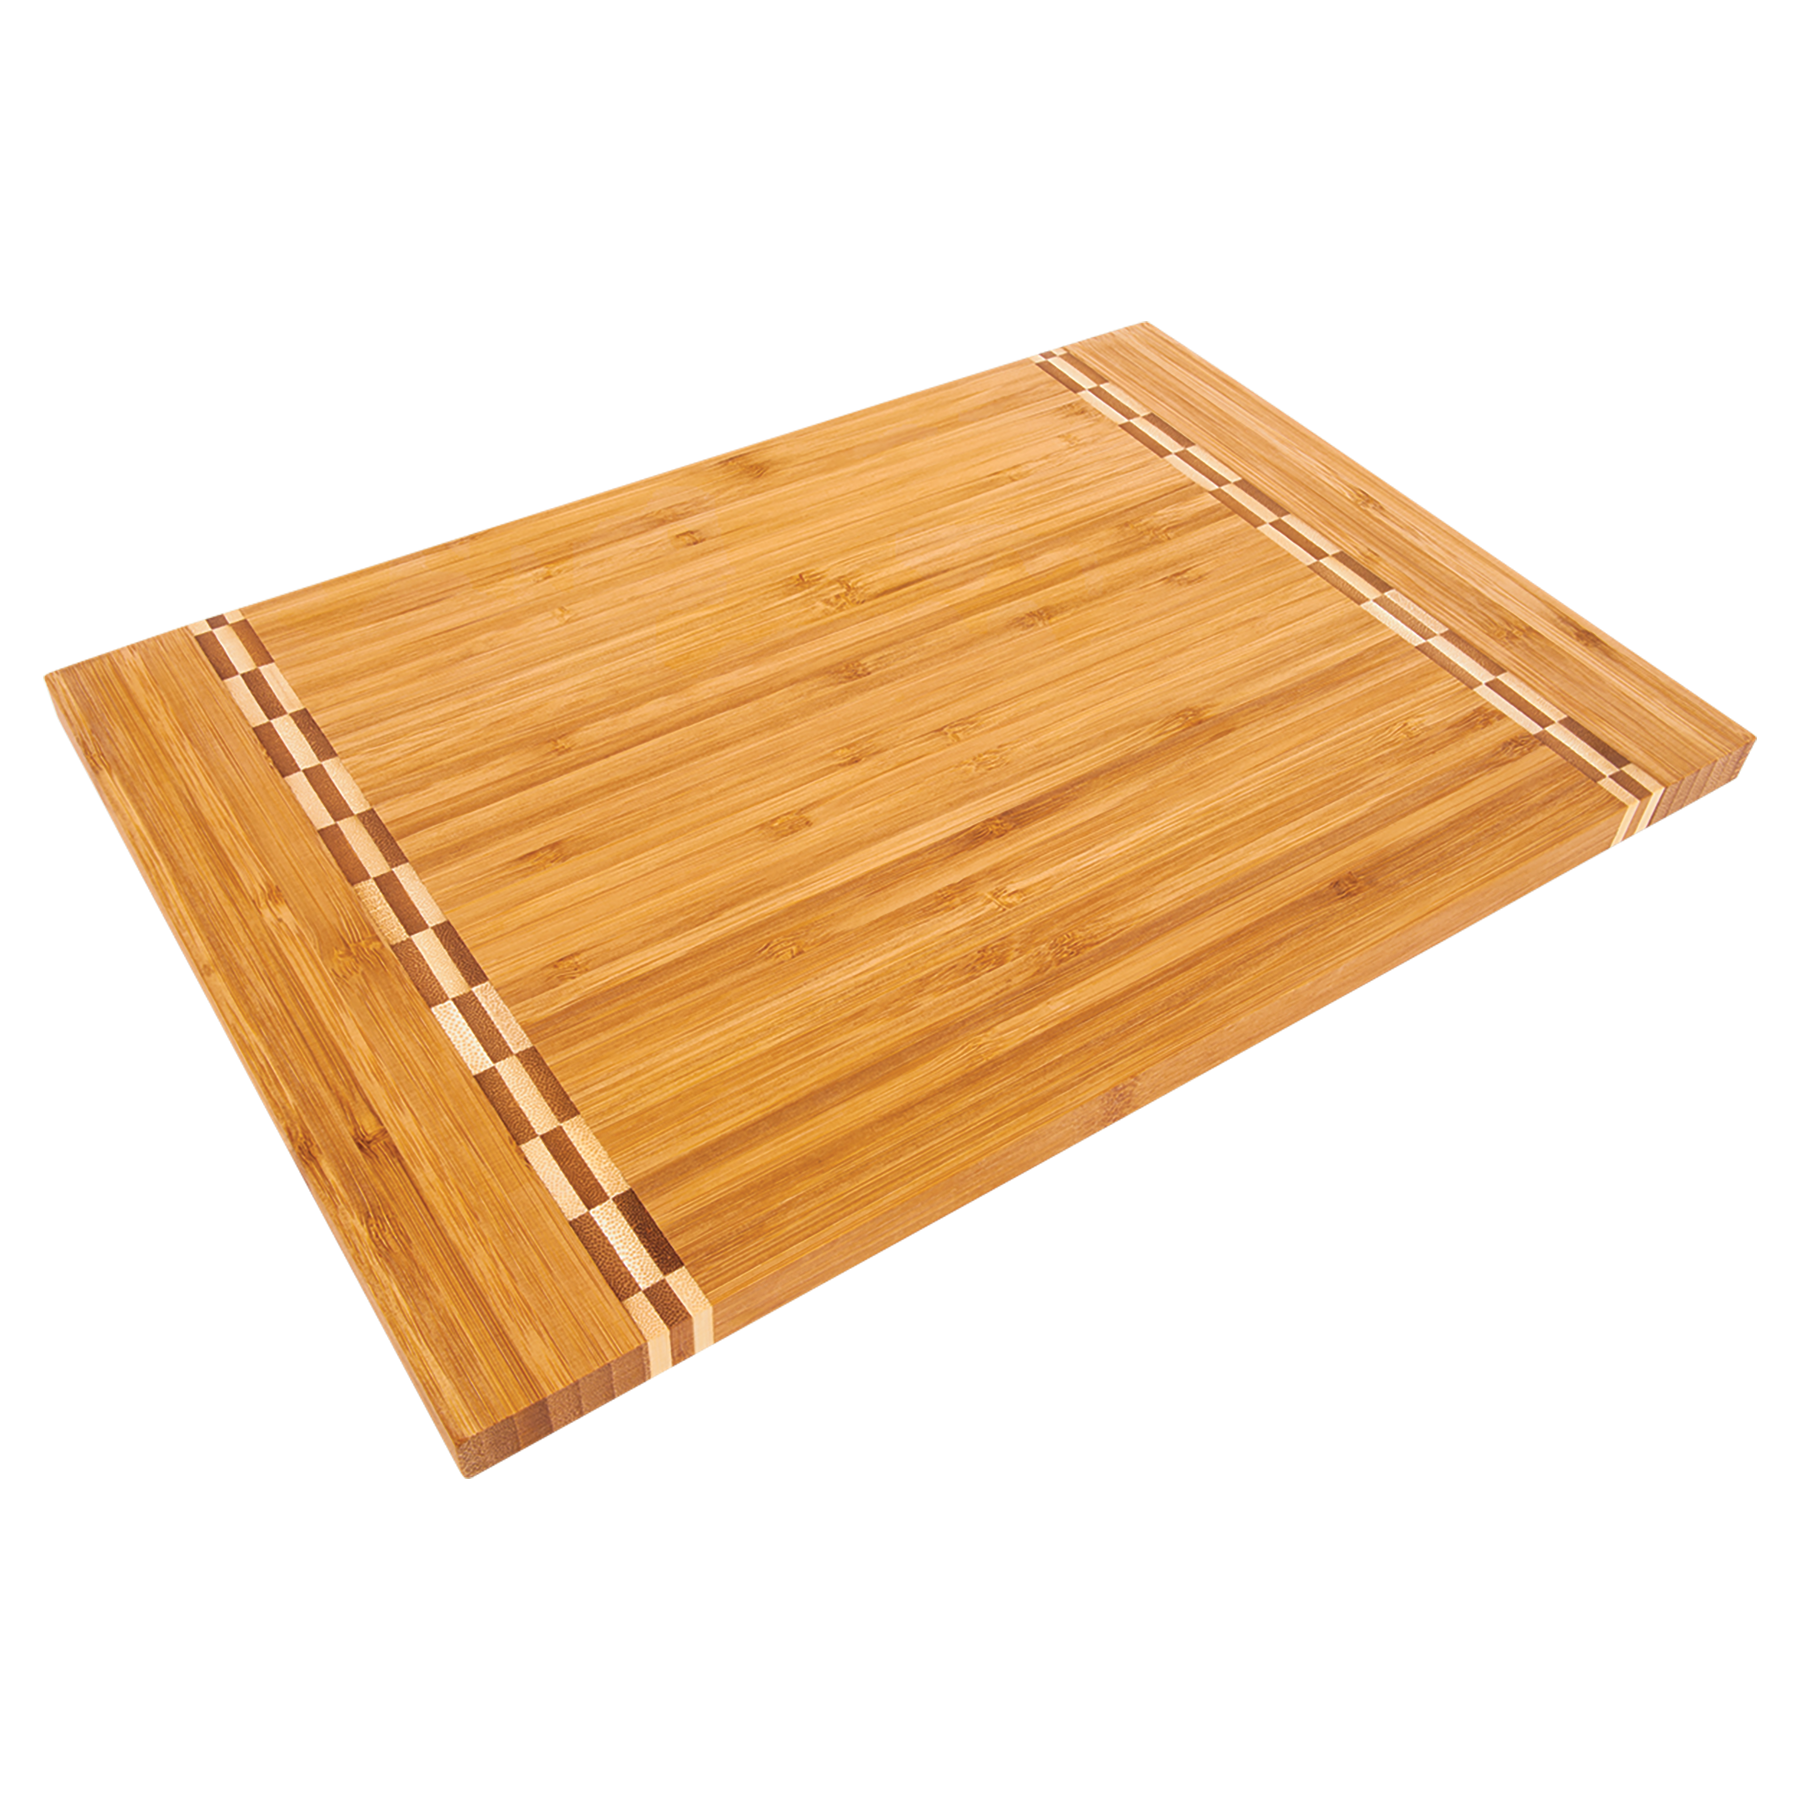 15" x 10 1/4" Bamboo Cutting Board with Butcher Block Inlay